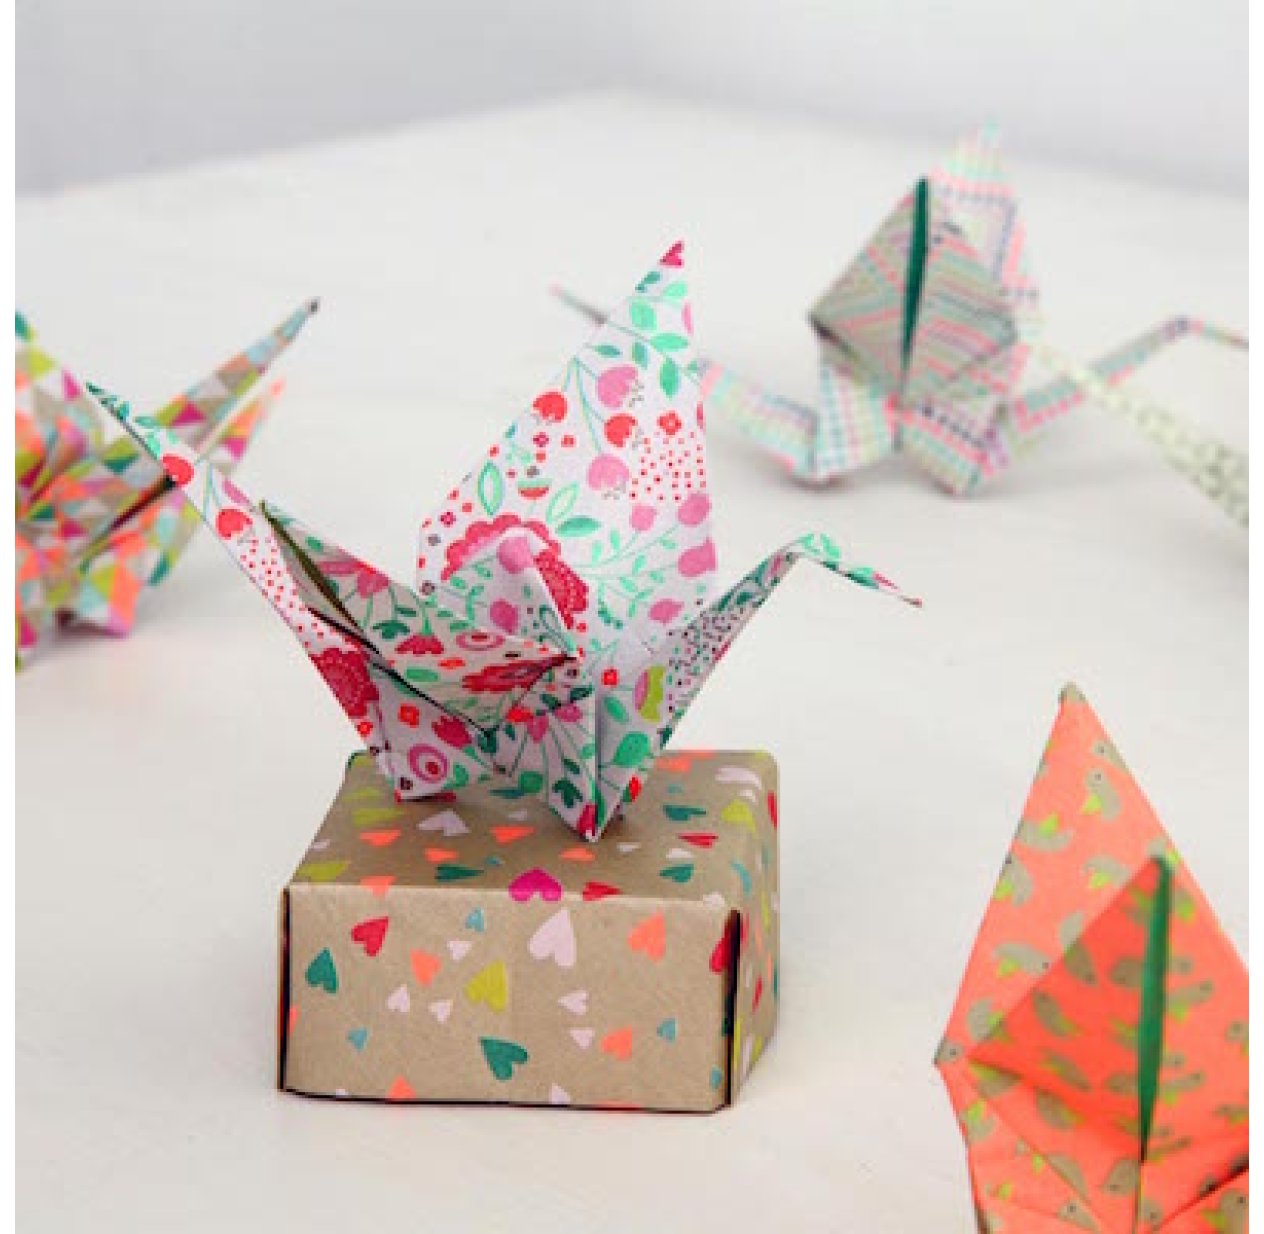 Coffret origami vert